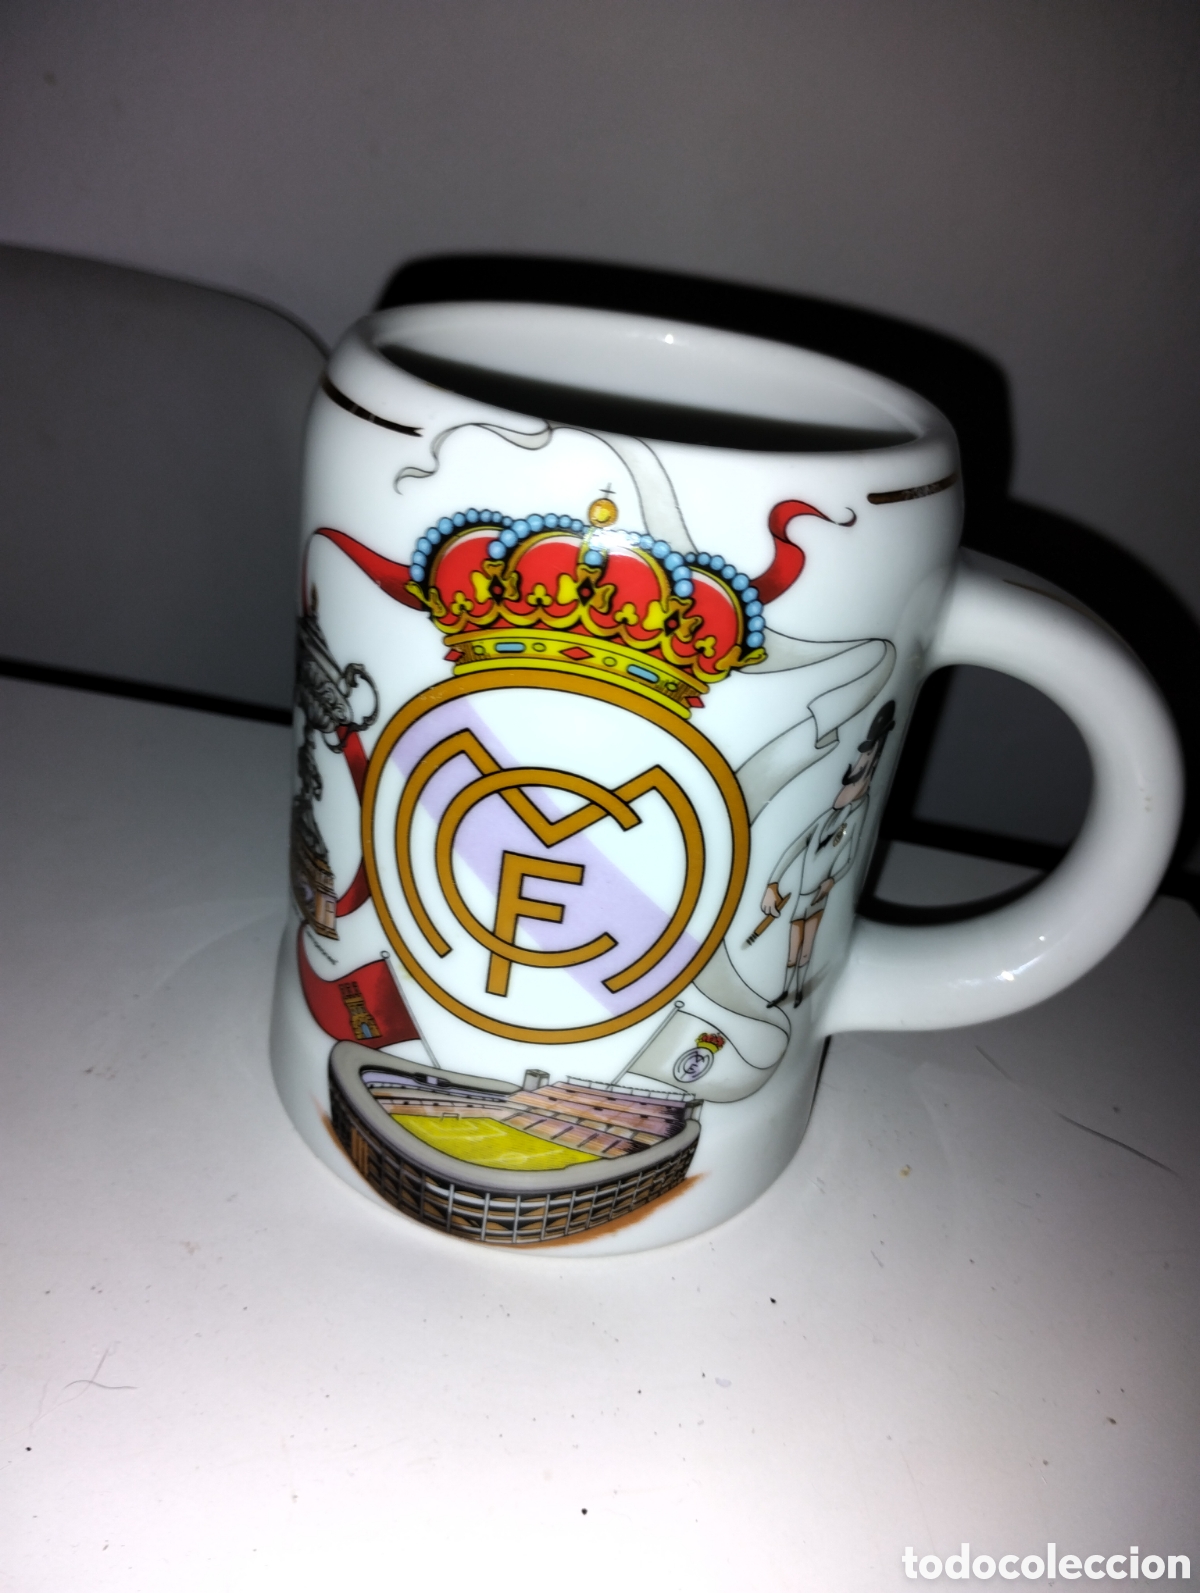 Taza cerámica Real Madrid